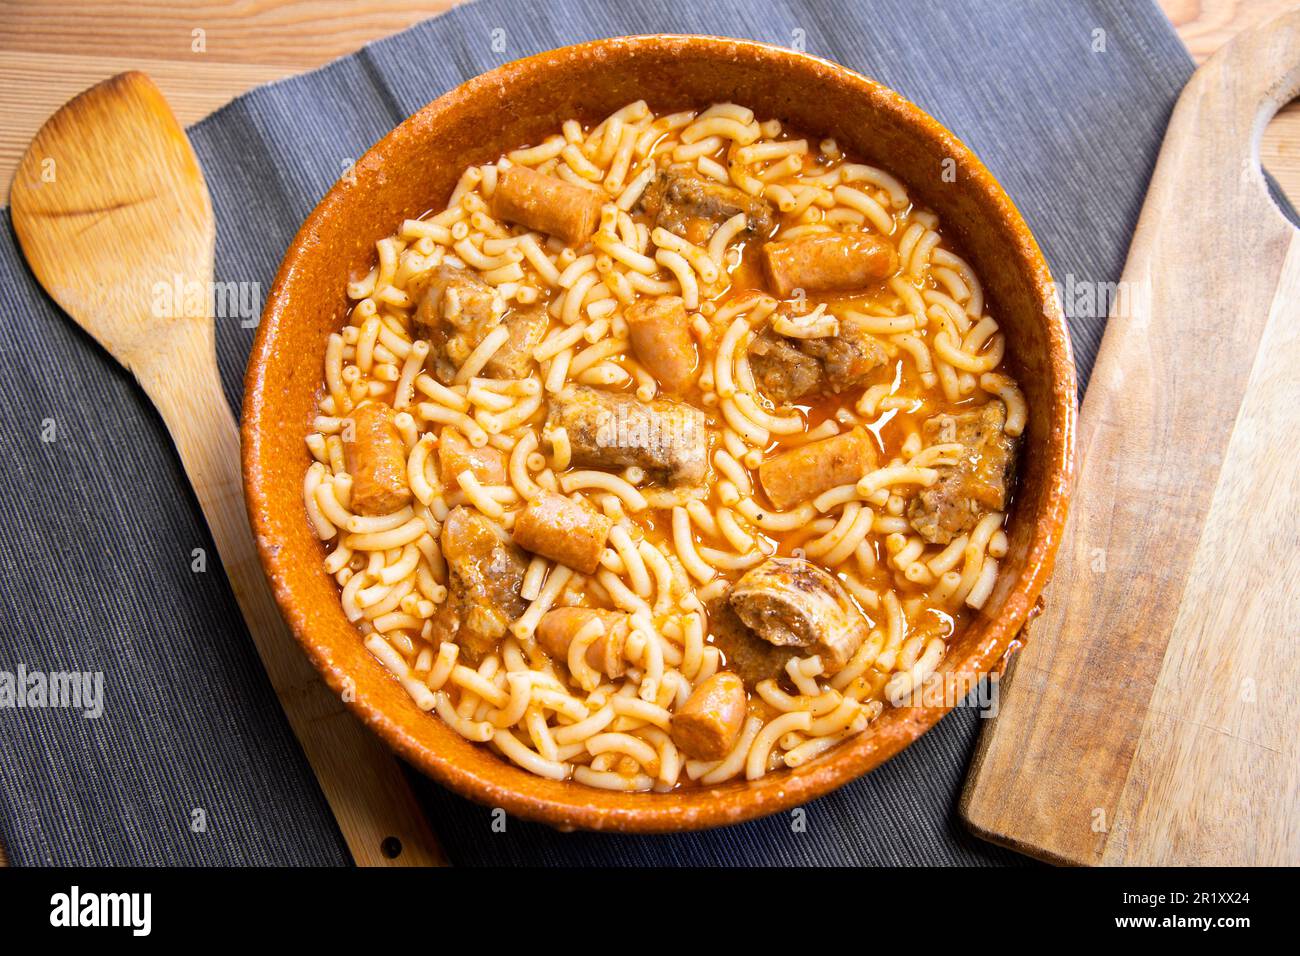 VEGAN FIDEUÁ RECIPE, Spanish Noodle Paella